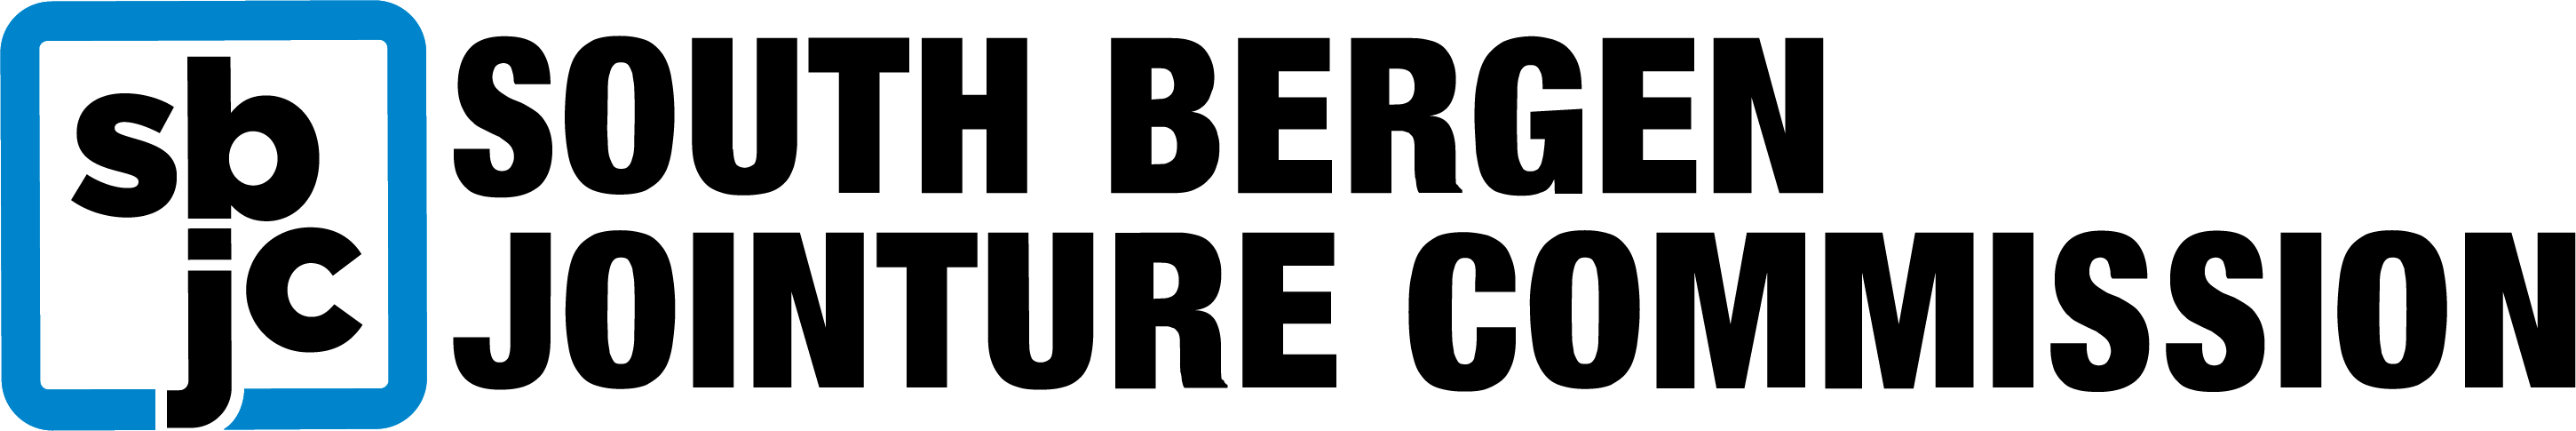 sbjc logo rectangle 